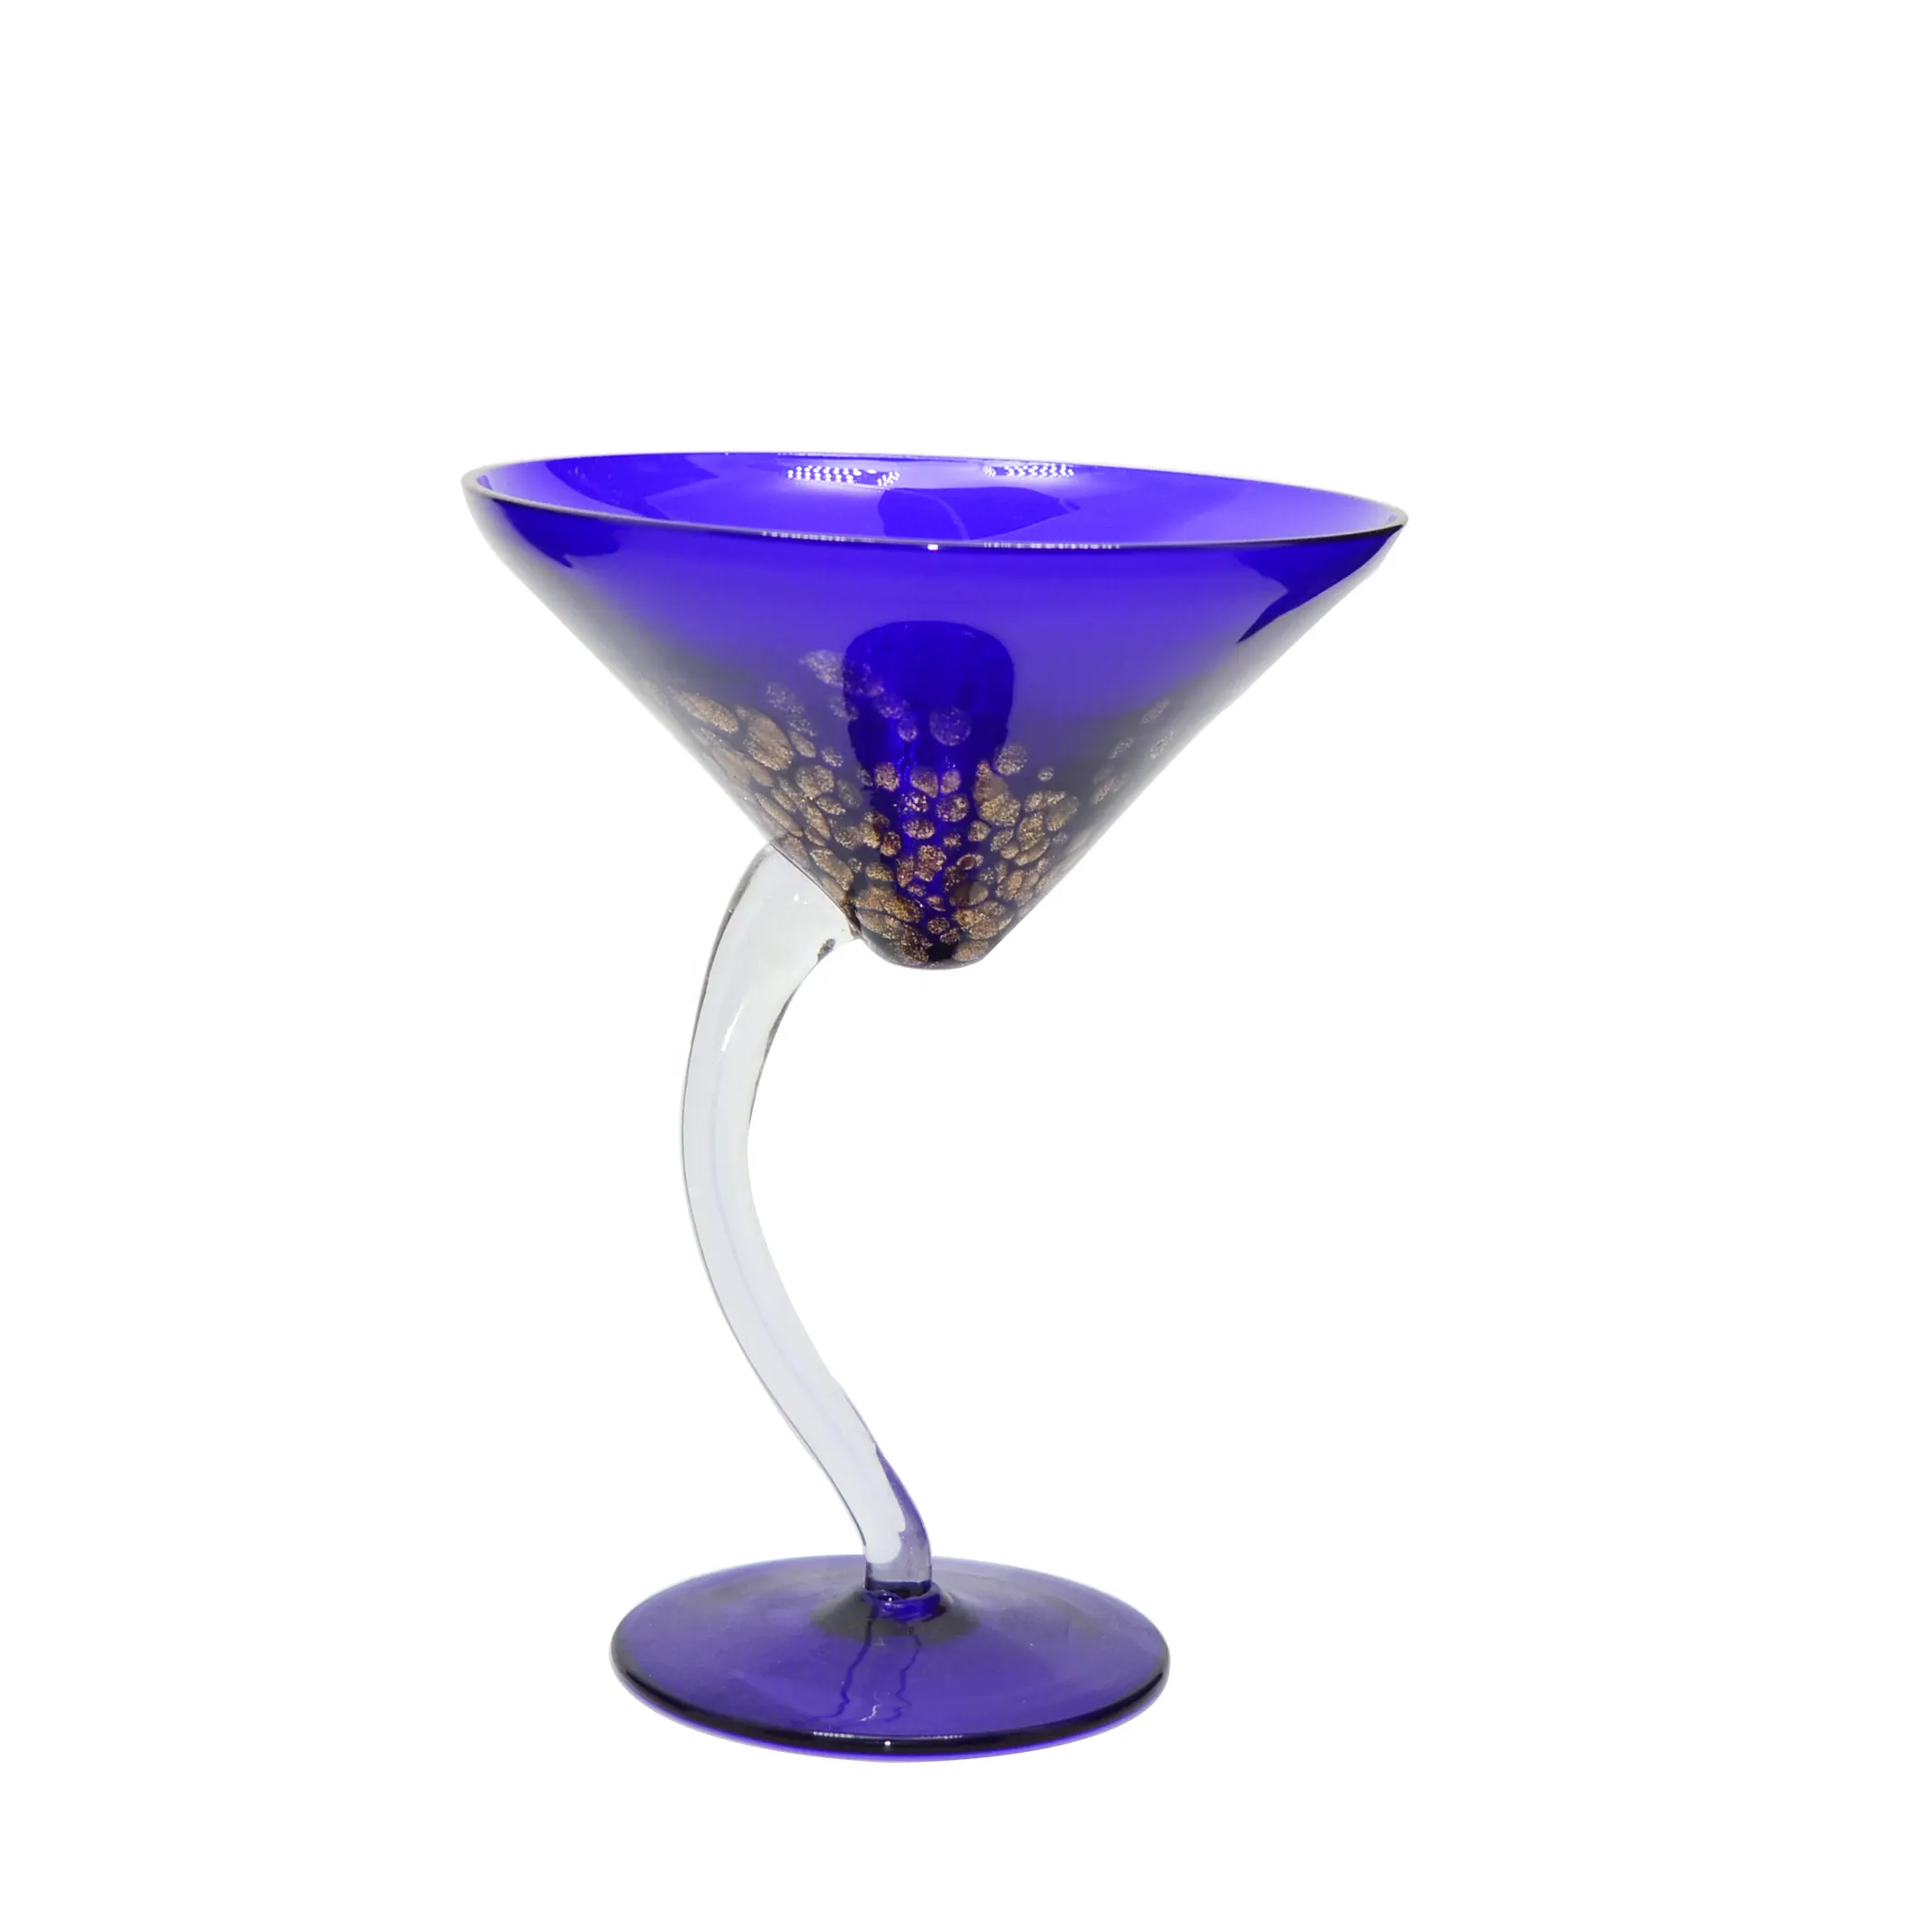 ABT Neue Produkte Crooked Stiel Blaue Farbe Martini Glas Cocktail glas